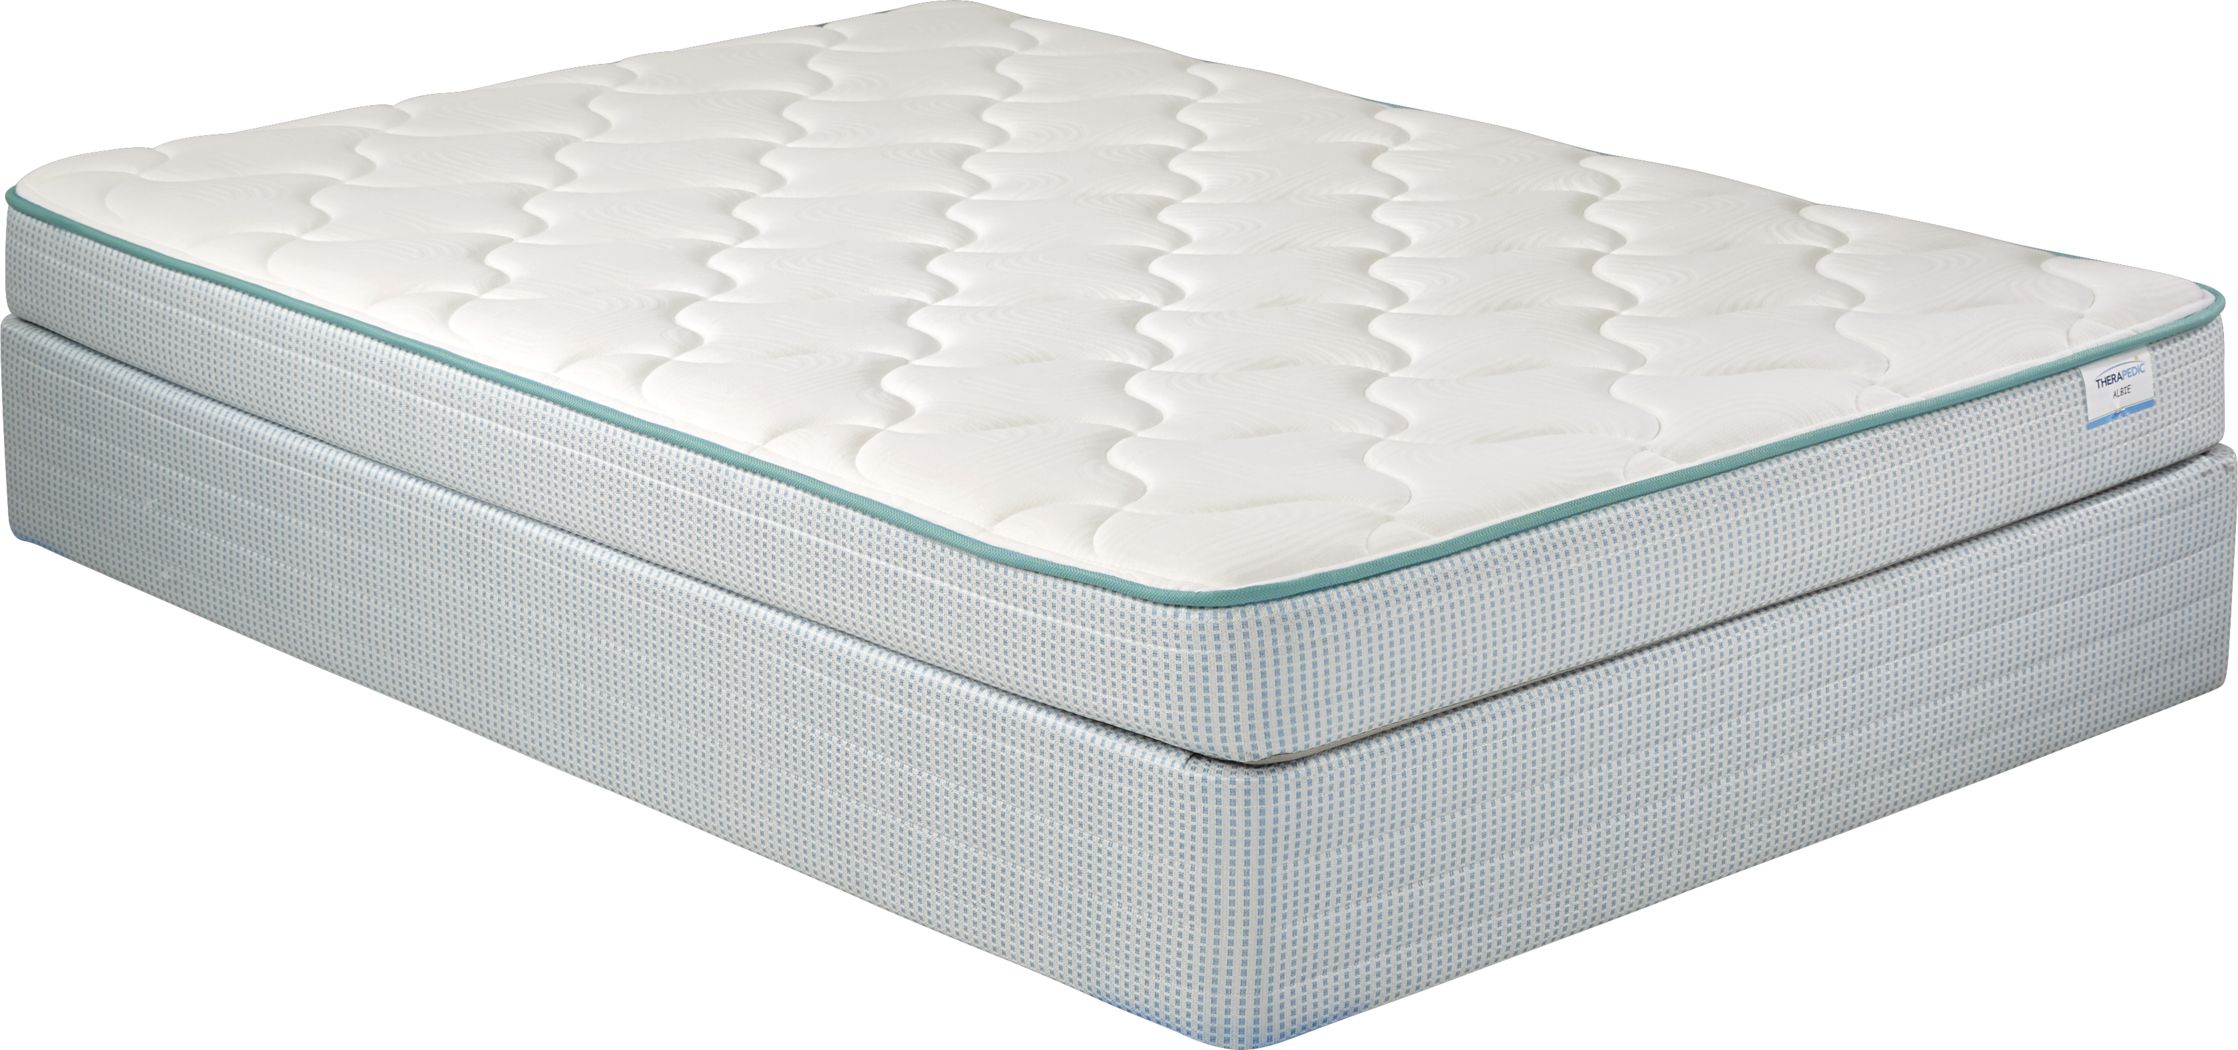 therapedic albie full mattress